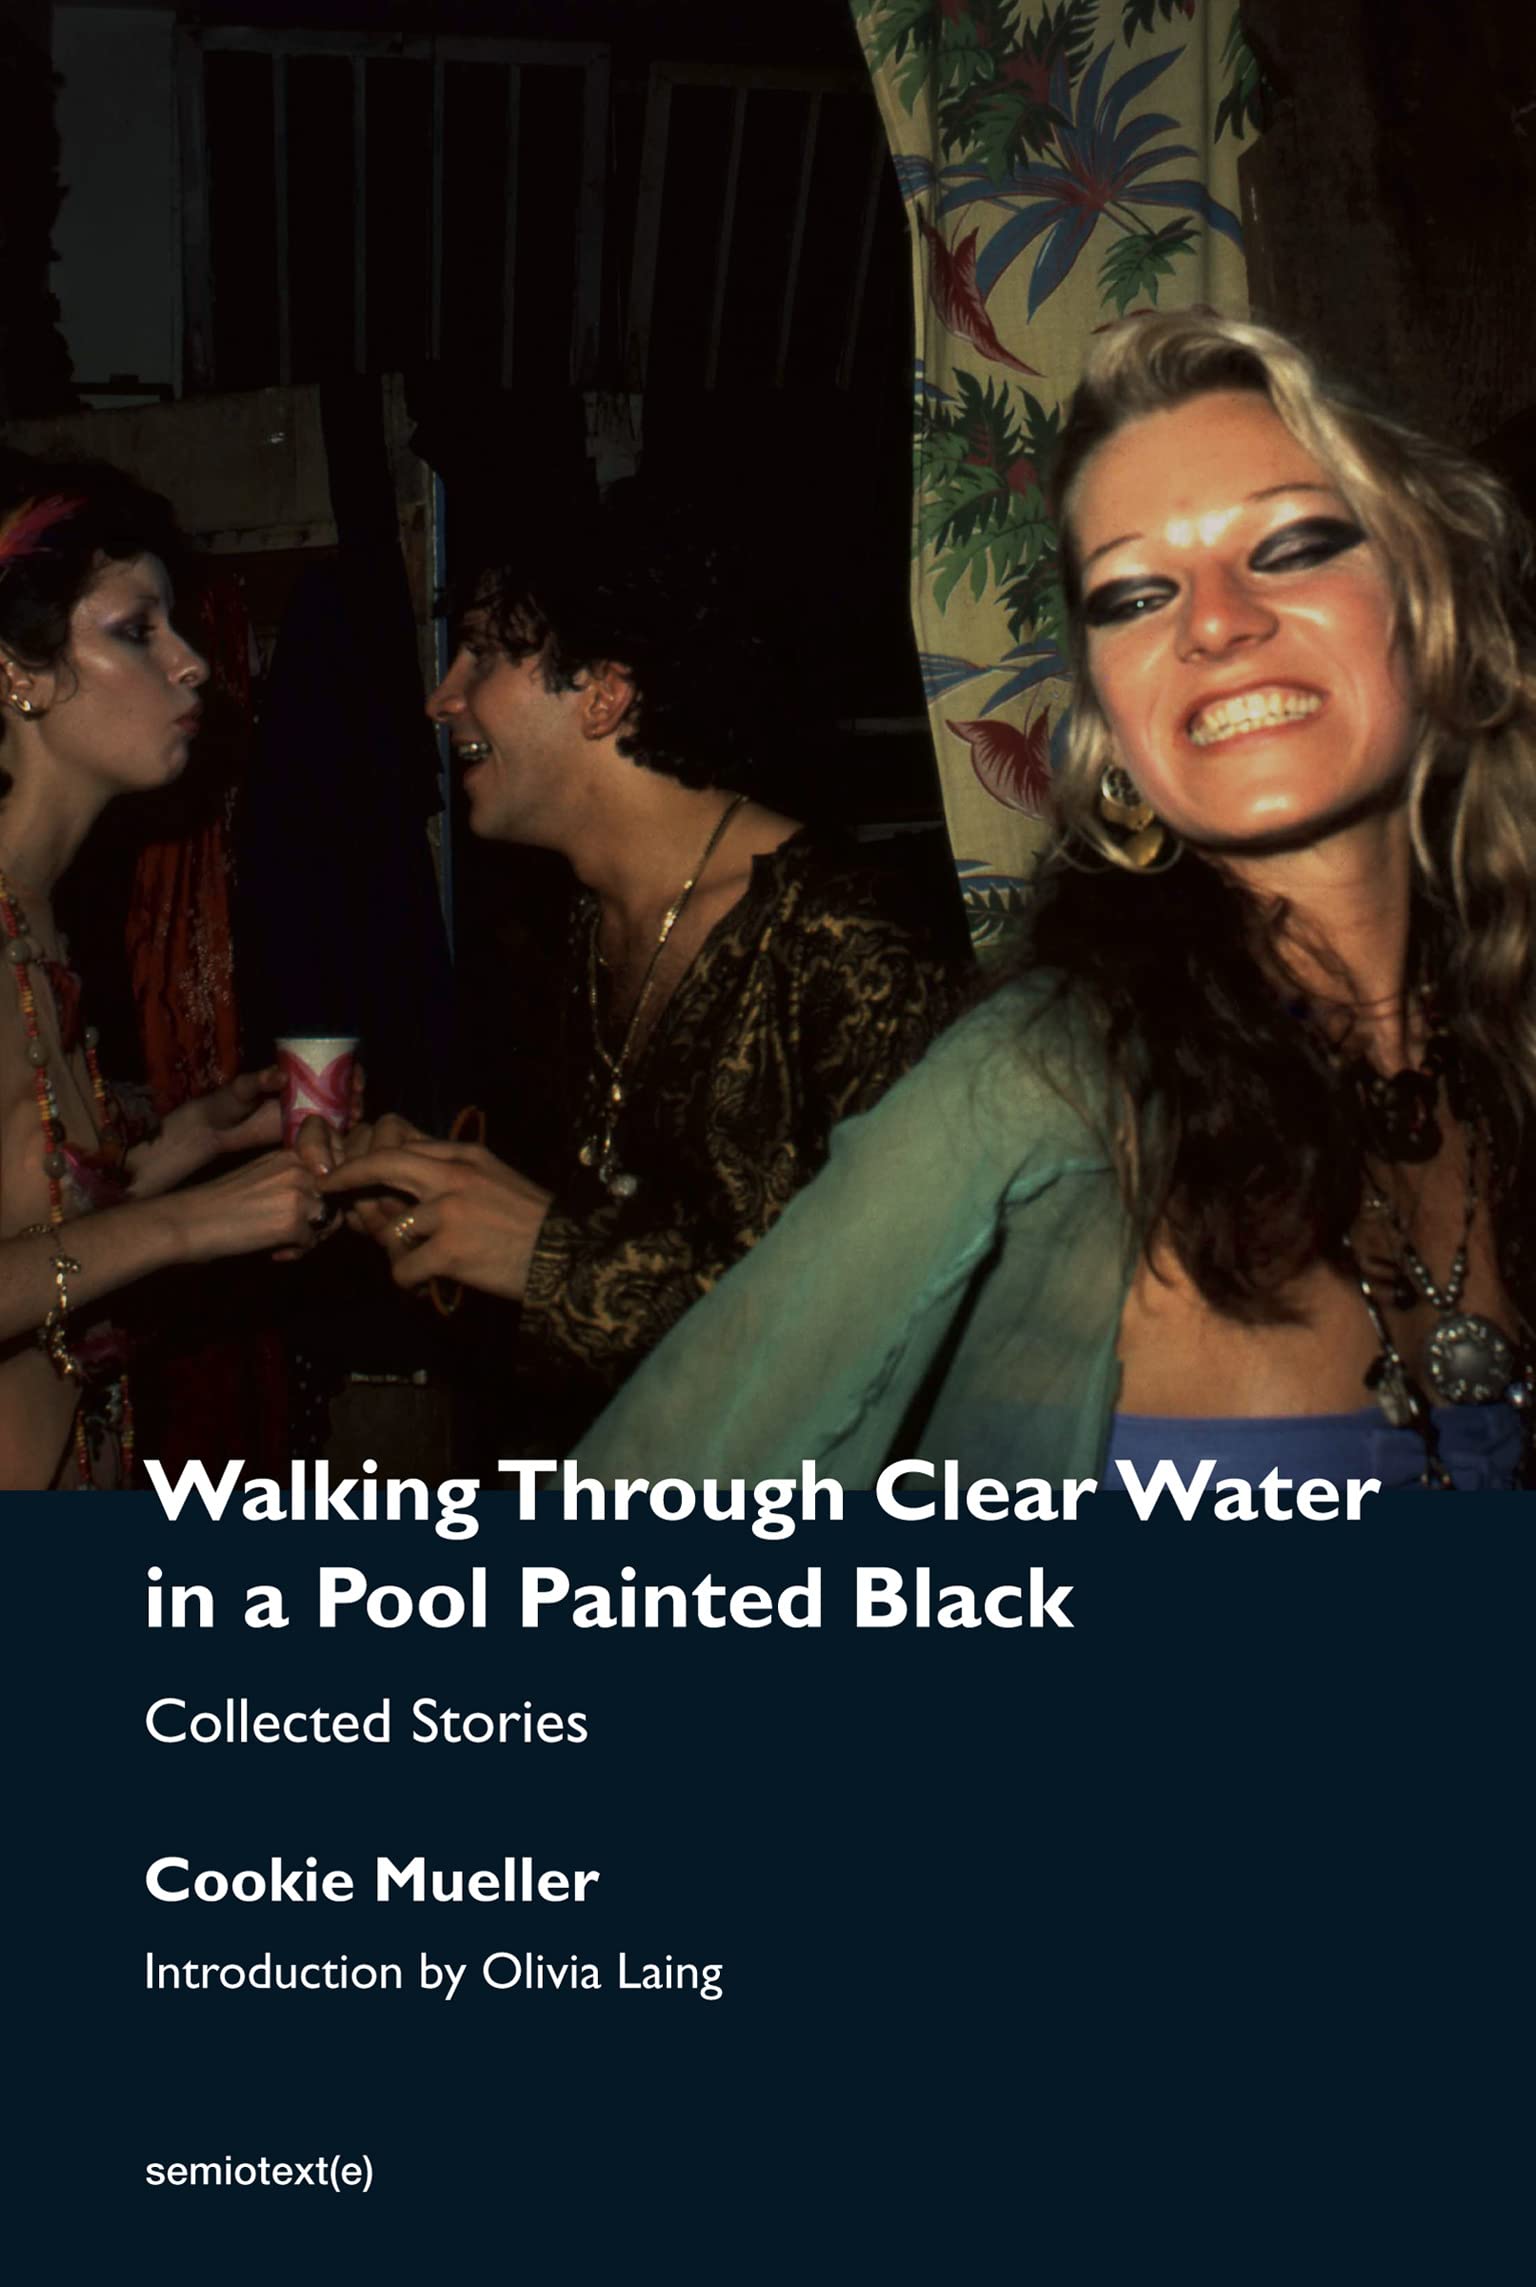 cookie mueller_walking through clear water in a pool painted black